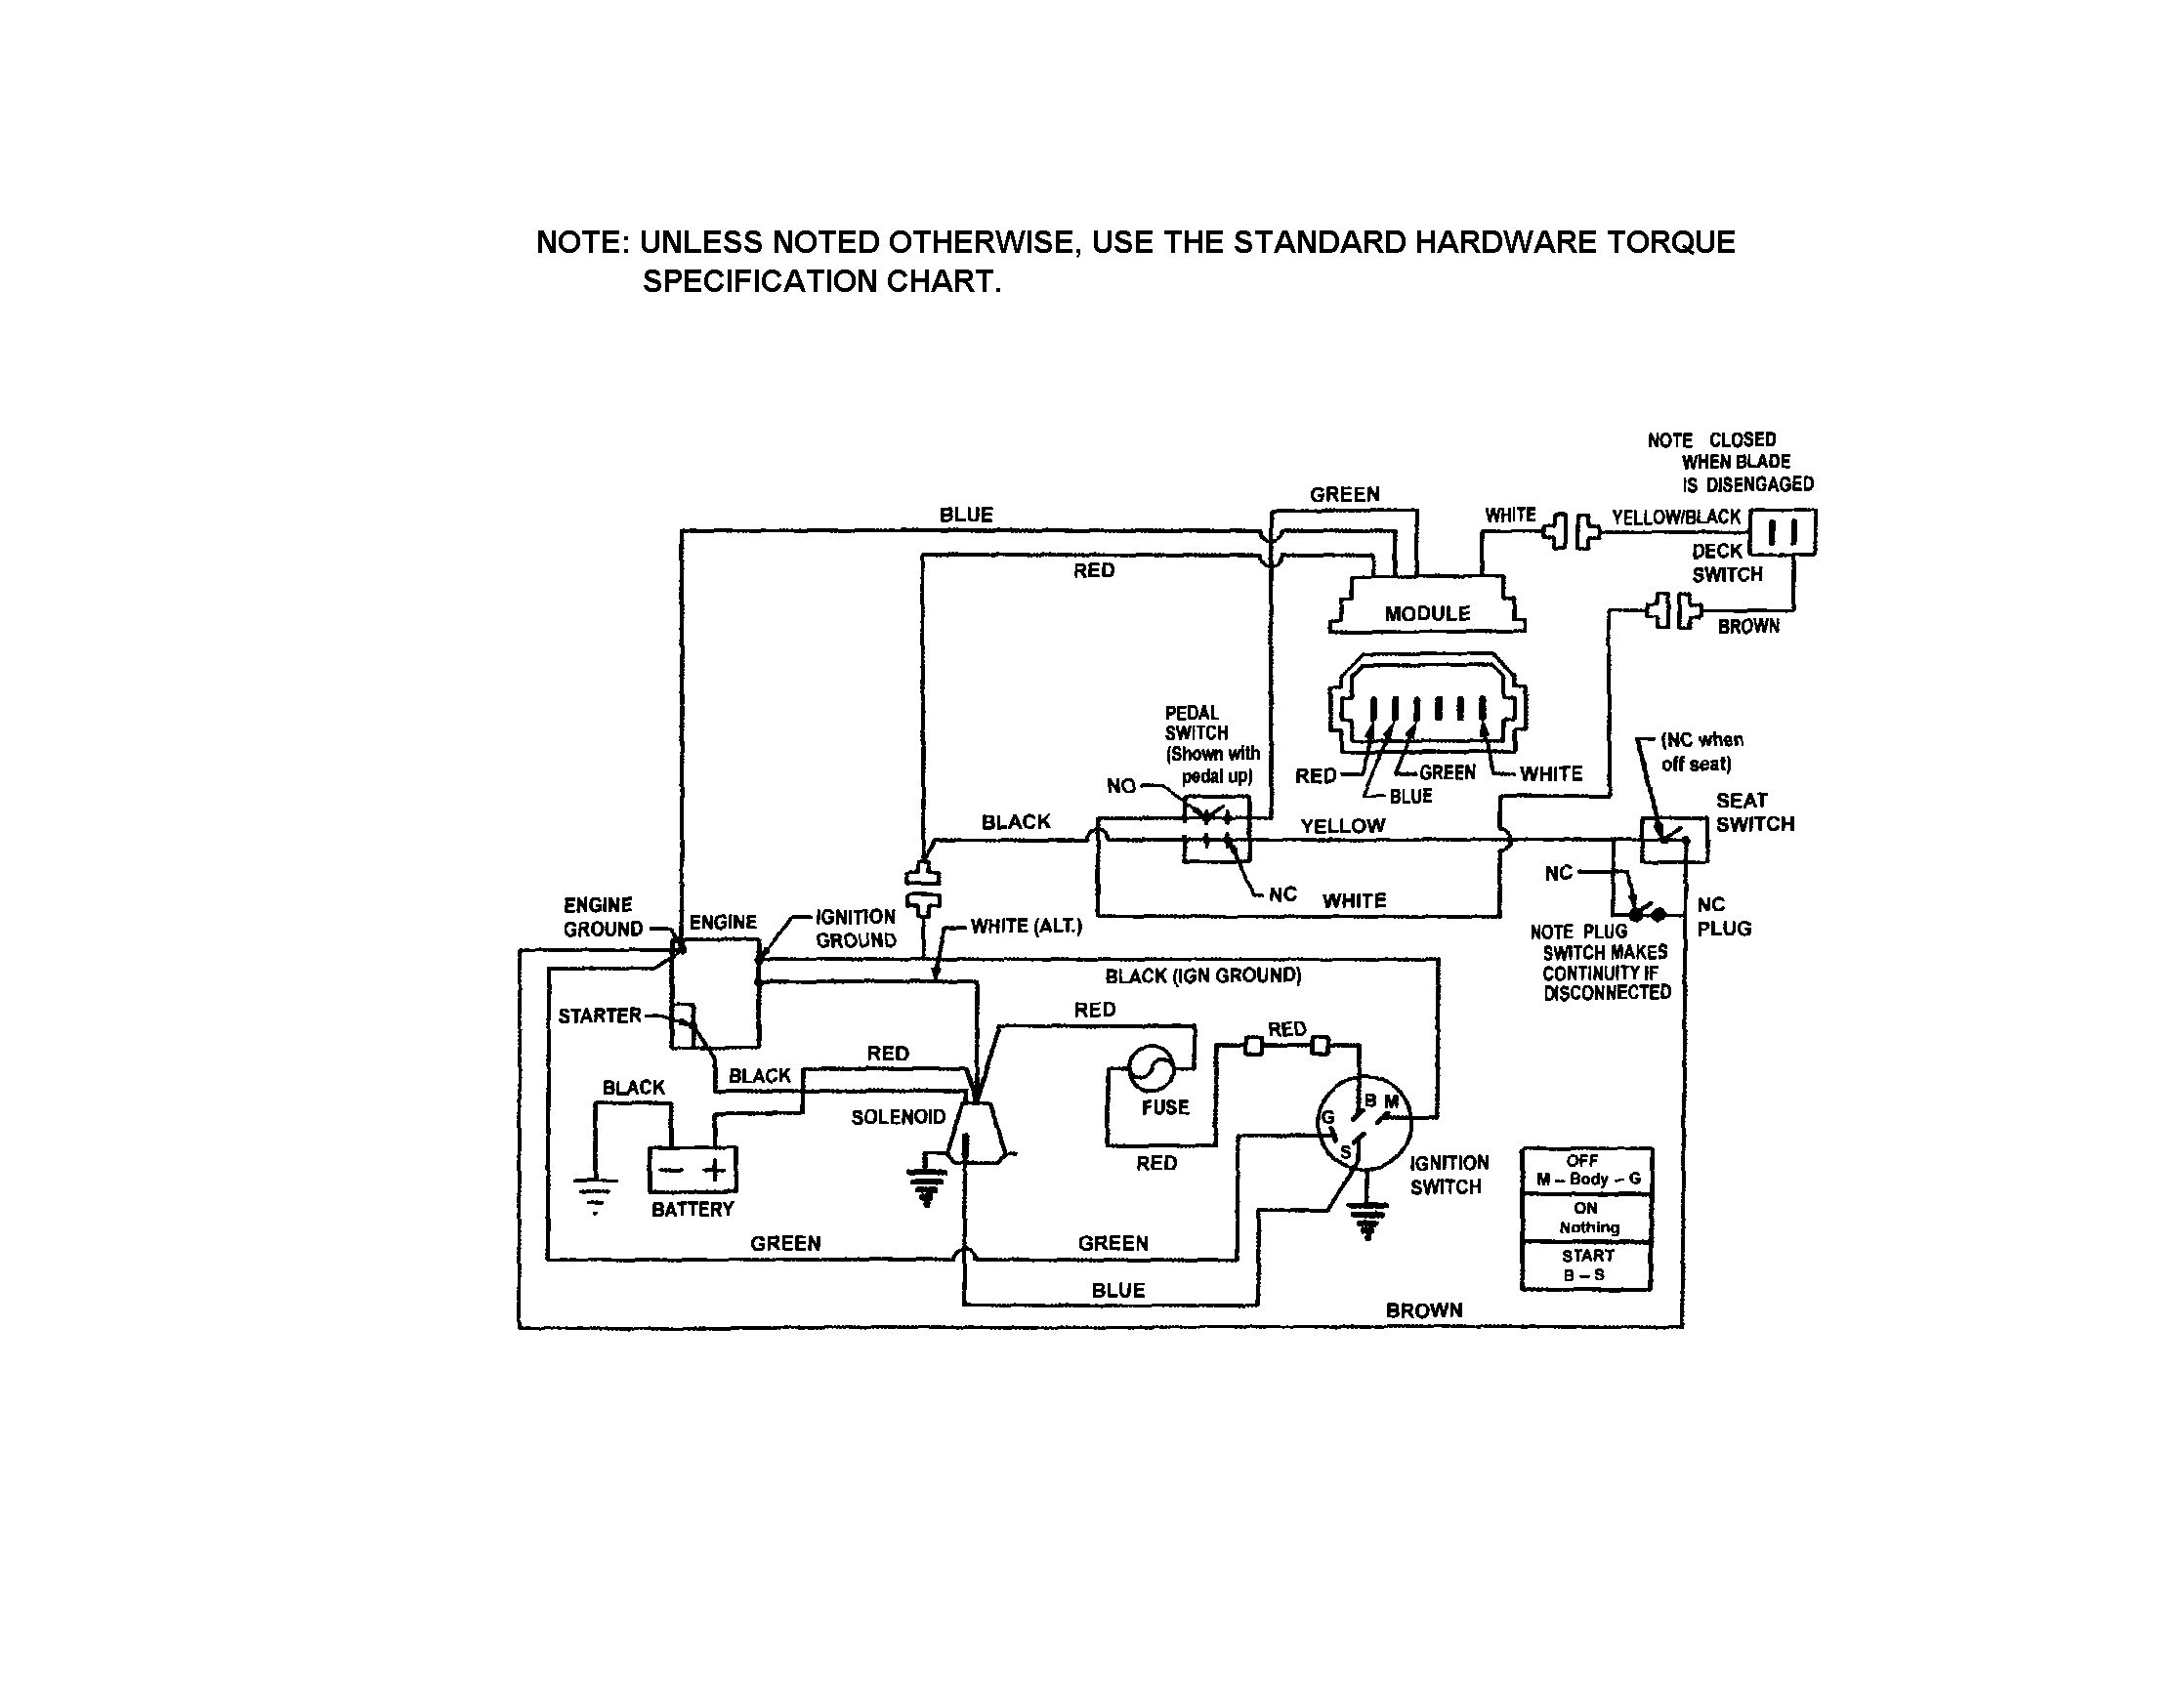 17.5 Hp Craftsman Wiring Diagram Briggs and Stratton 17 5 Hp Engine Diagram Of 17.5 Hp Craftsman Wiring Diagram